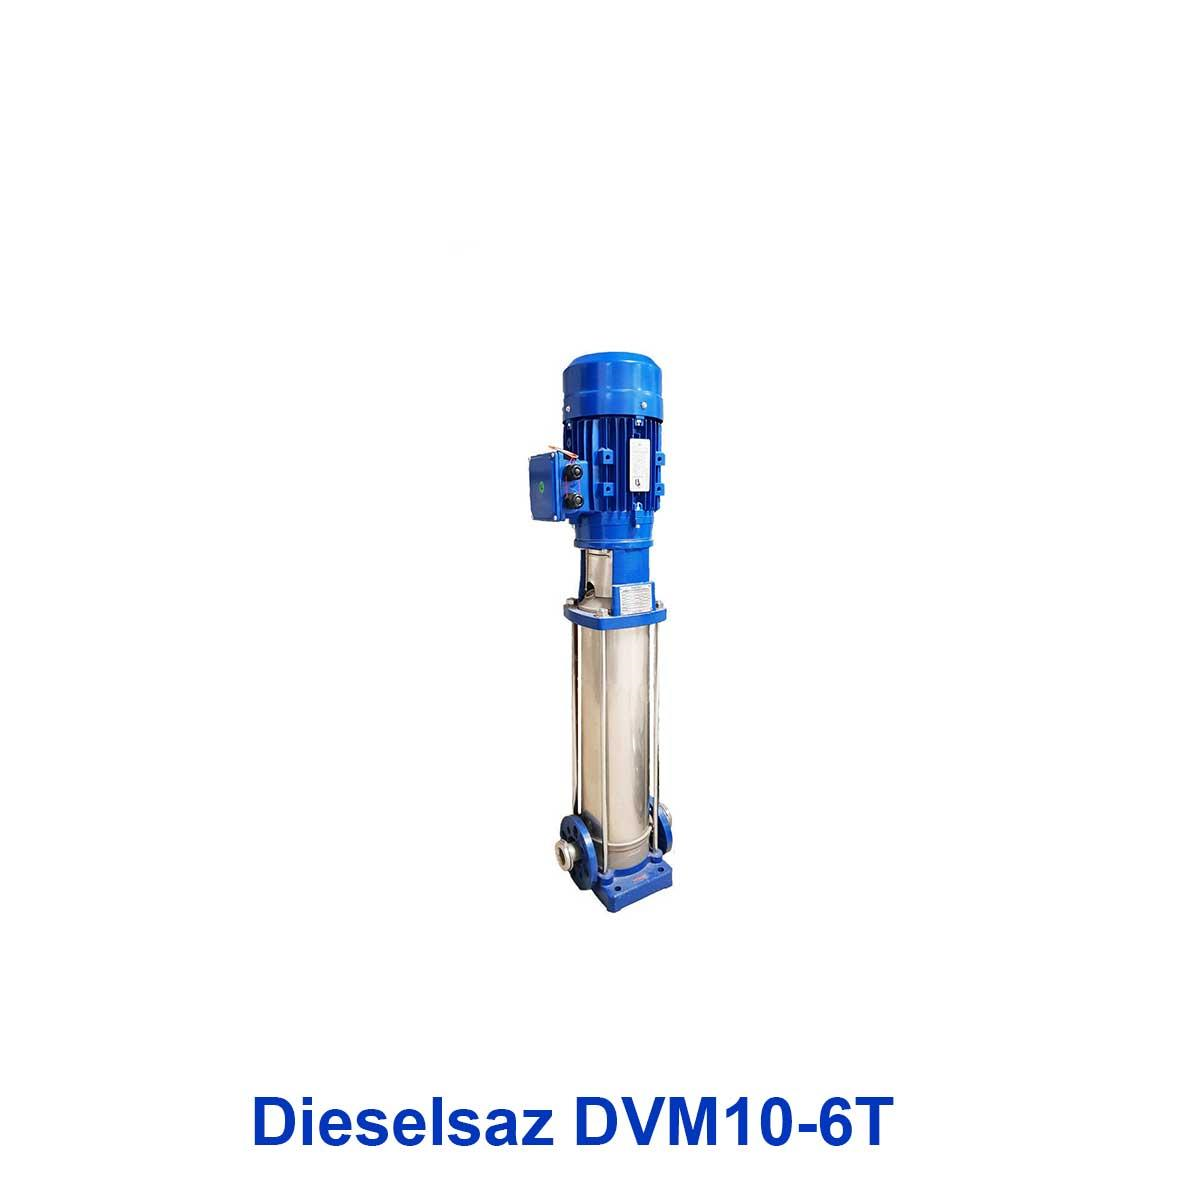 waterpump-vertical-Dieselsaz-DVM10-6T